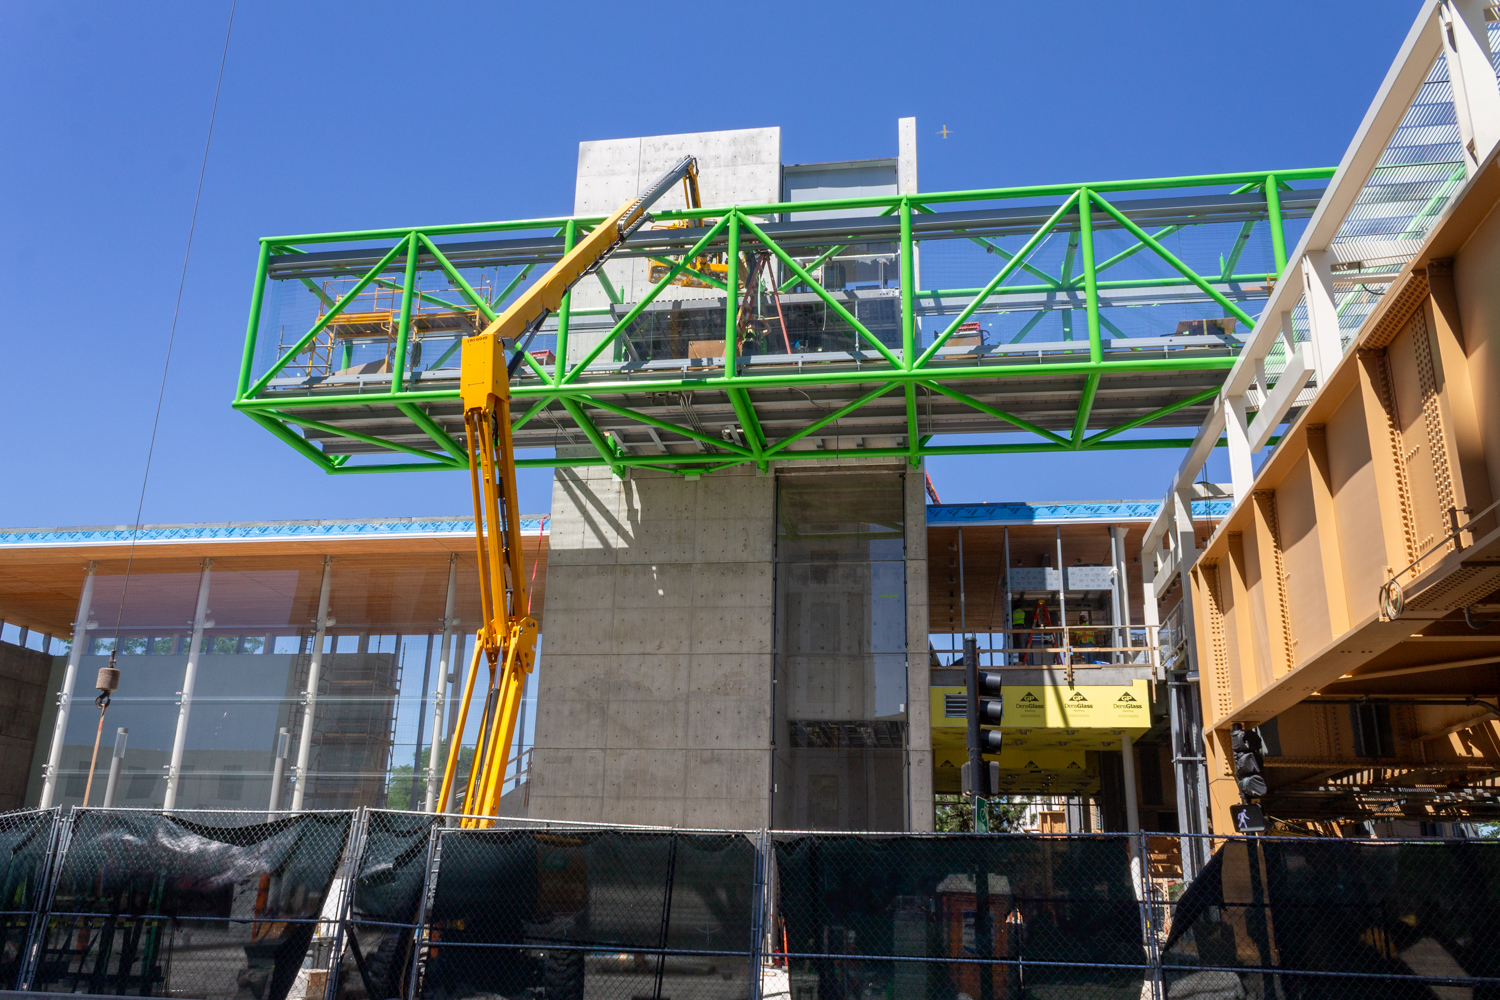 CTA Damen Green Line station construction